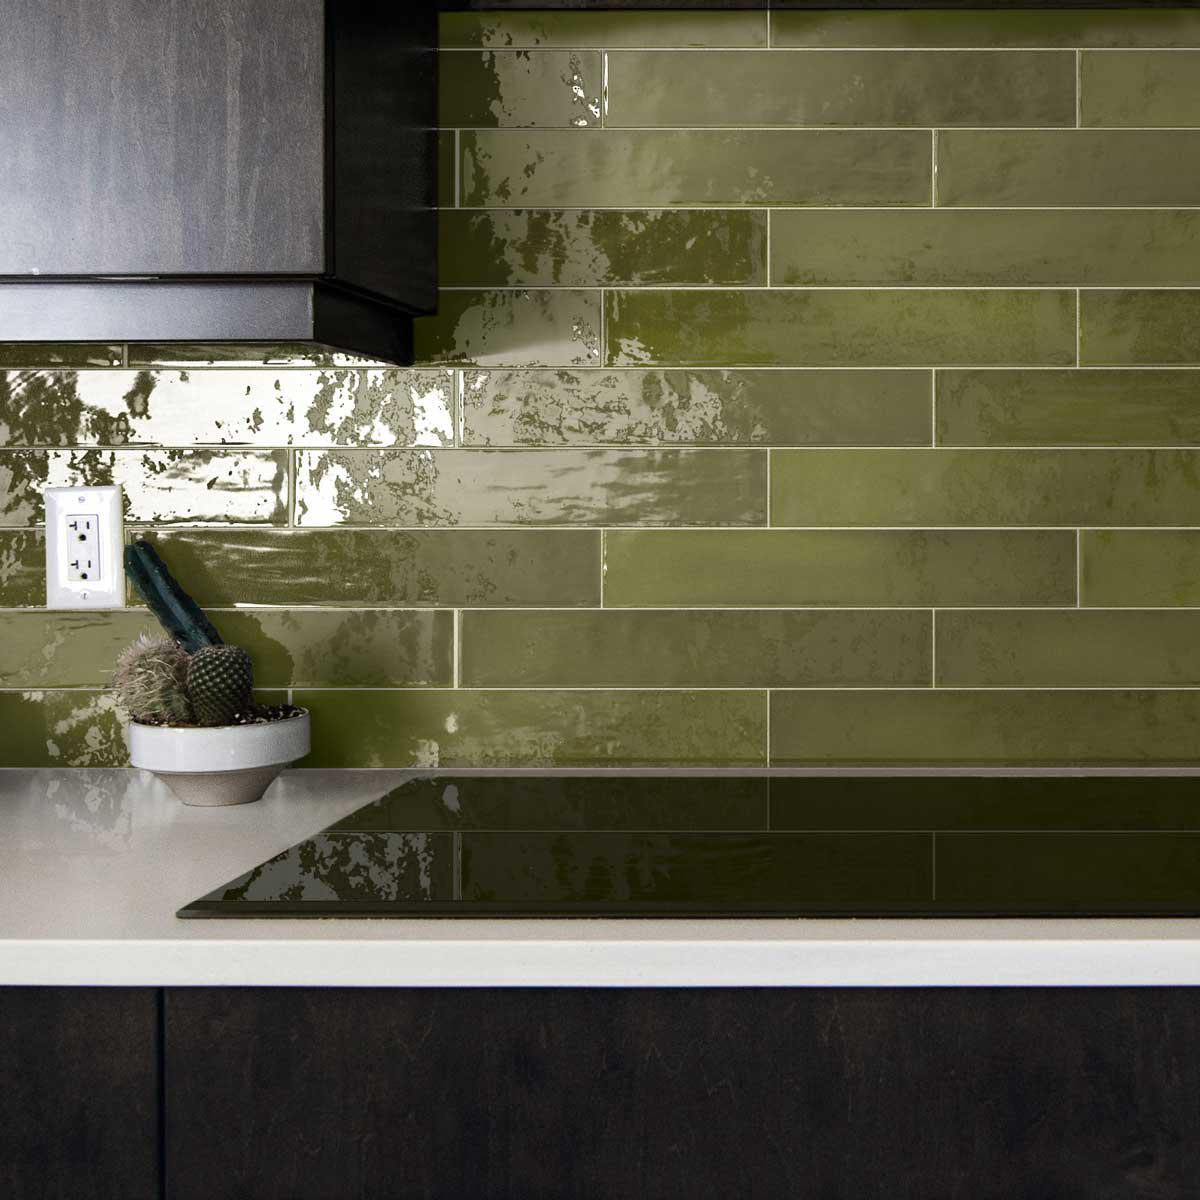 Moody black and green kitchen with glazed square ceramic tile backsplash